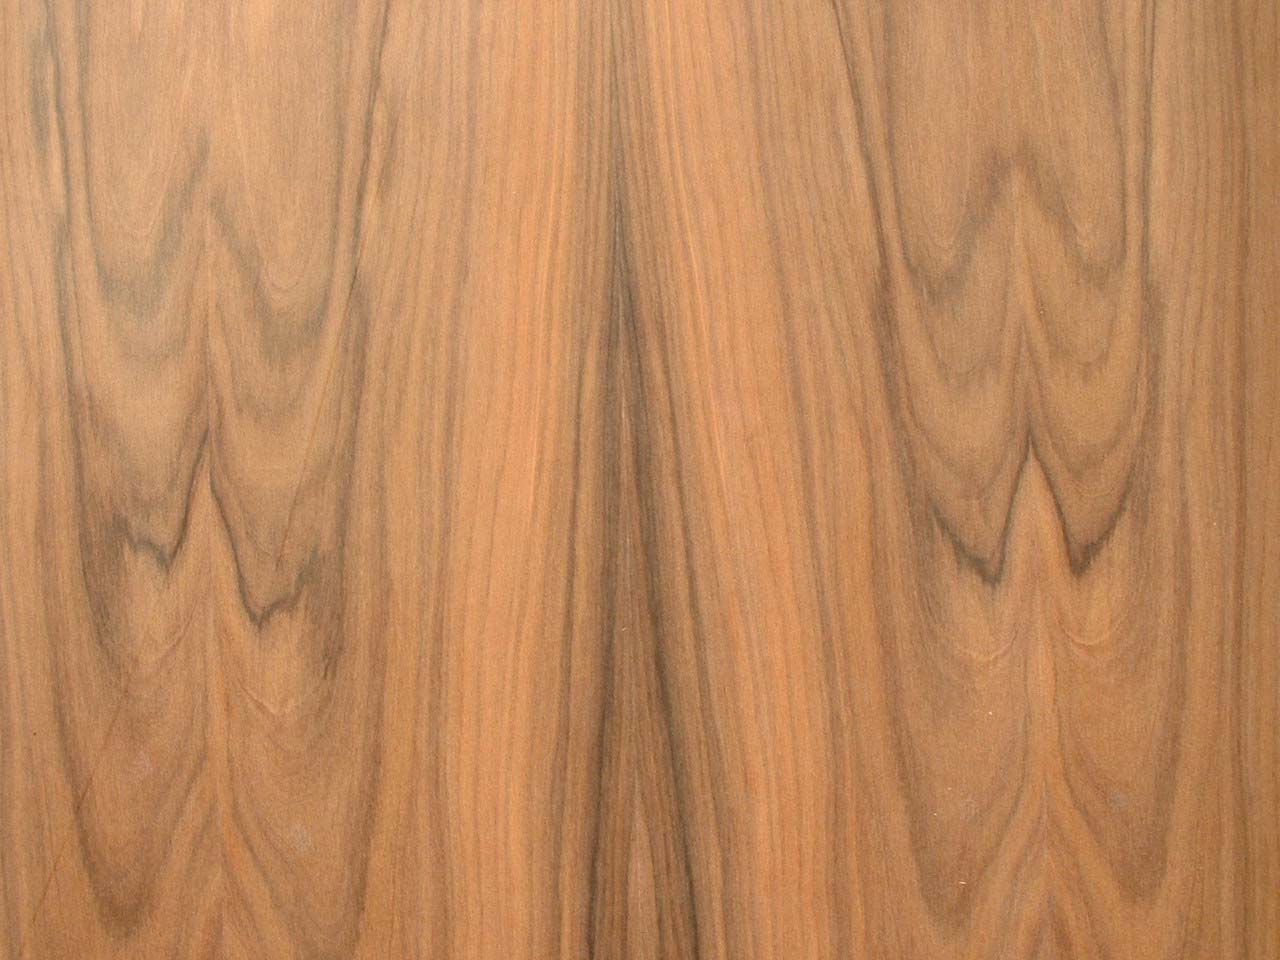 Oak Burl Raw Wood Veneer Sheets 6.5 x 21 inches 1/42nd                    4704-1 